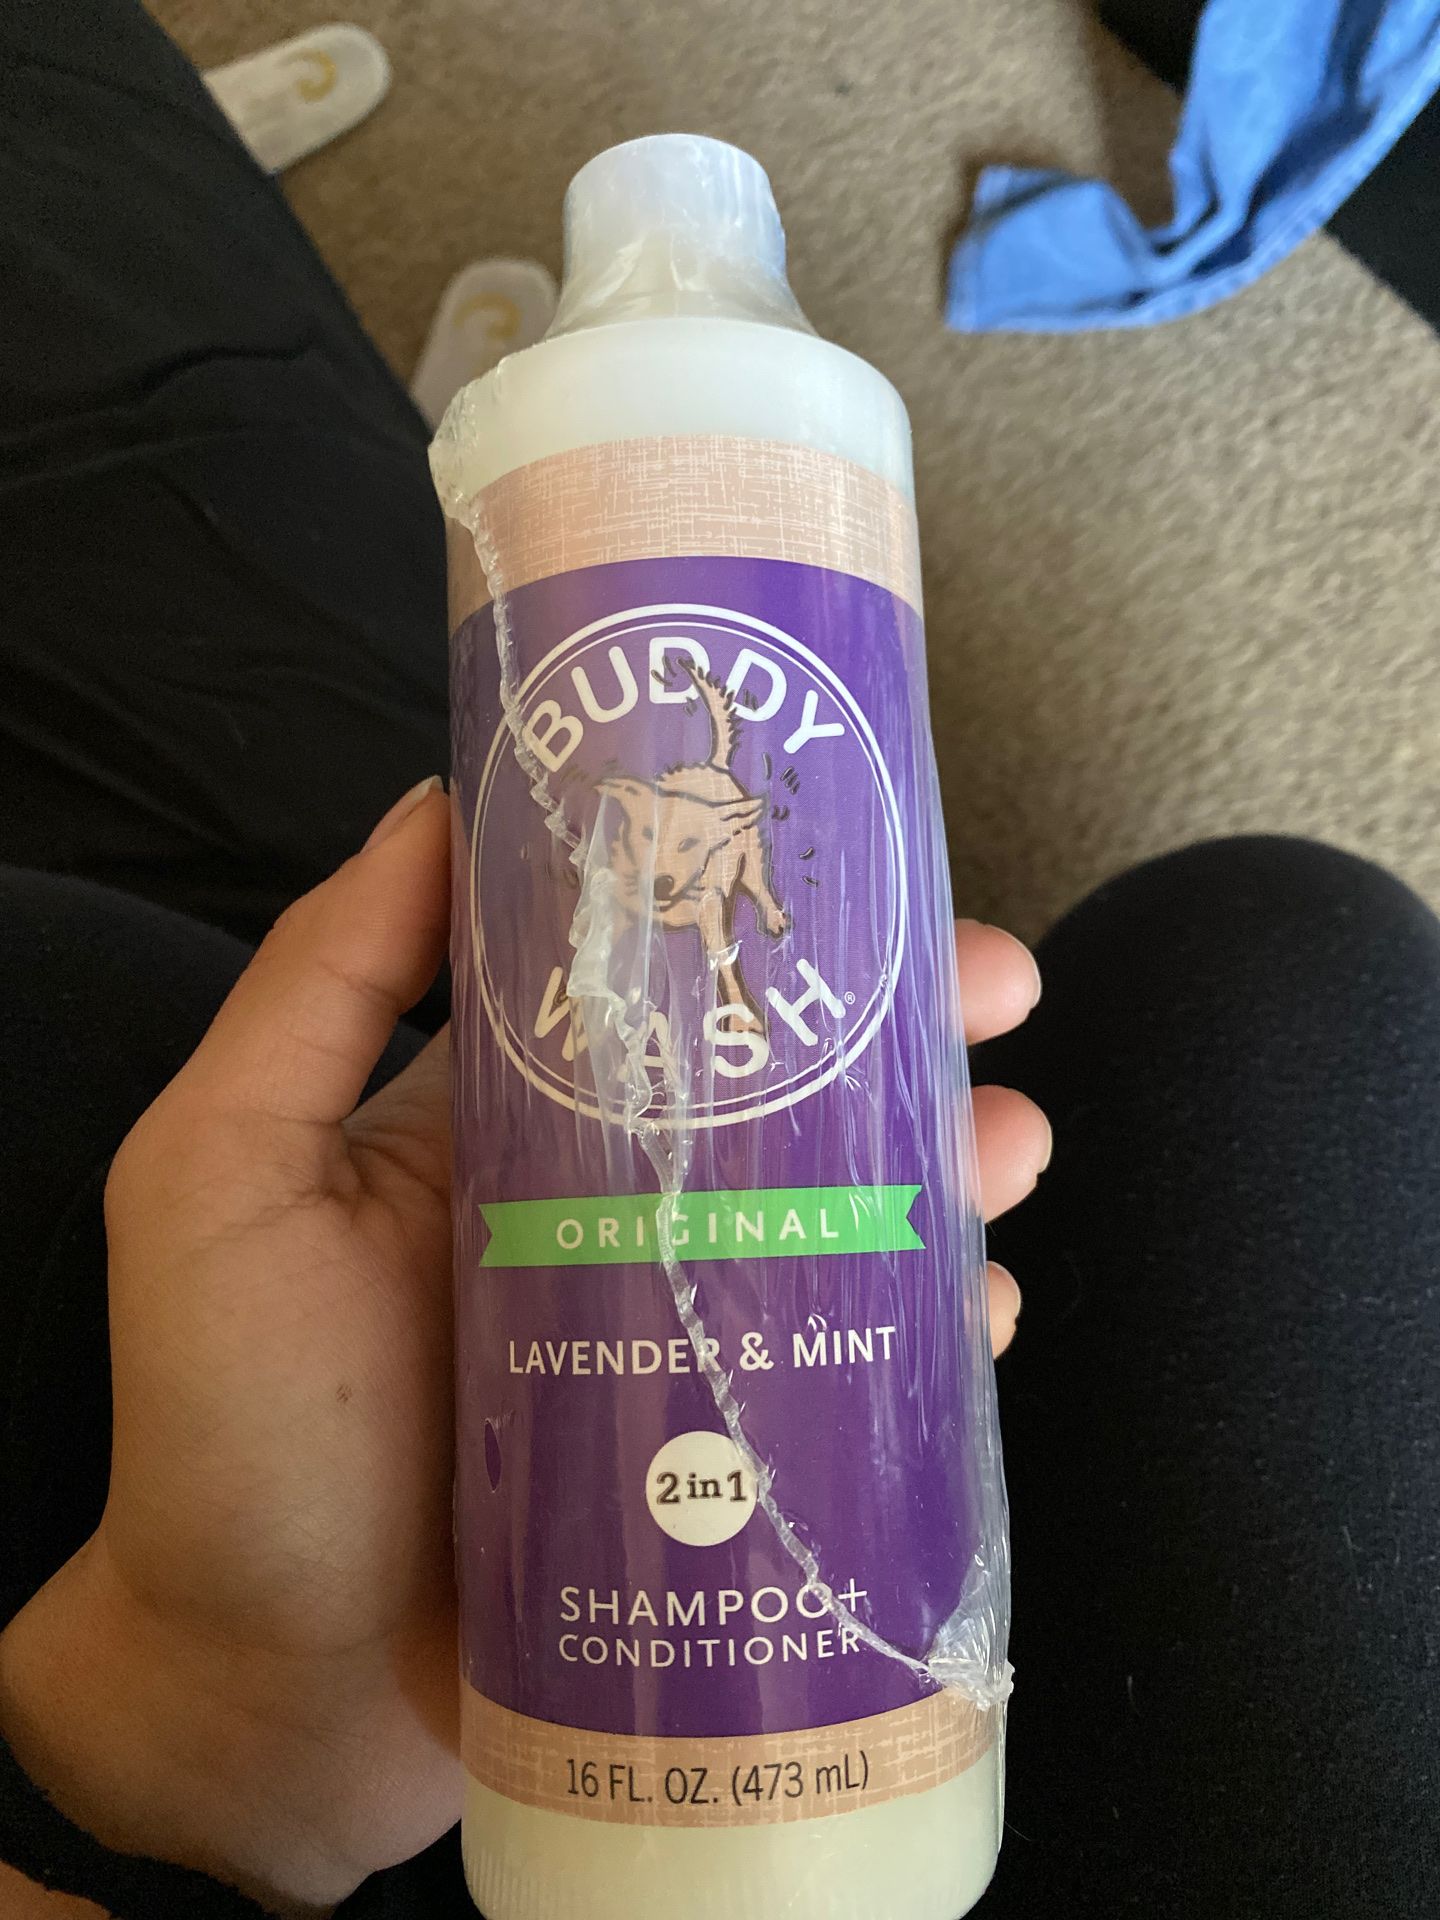 Dog shampoo and conditioner